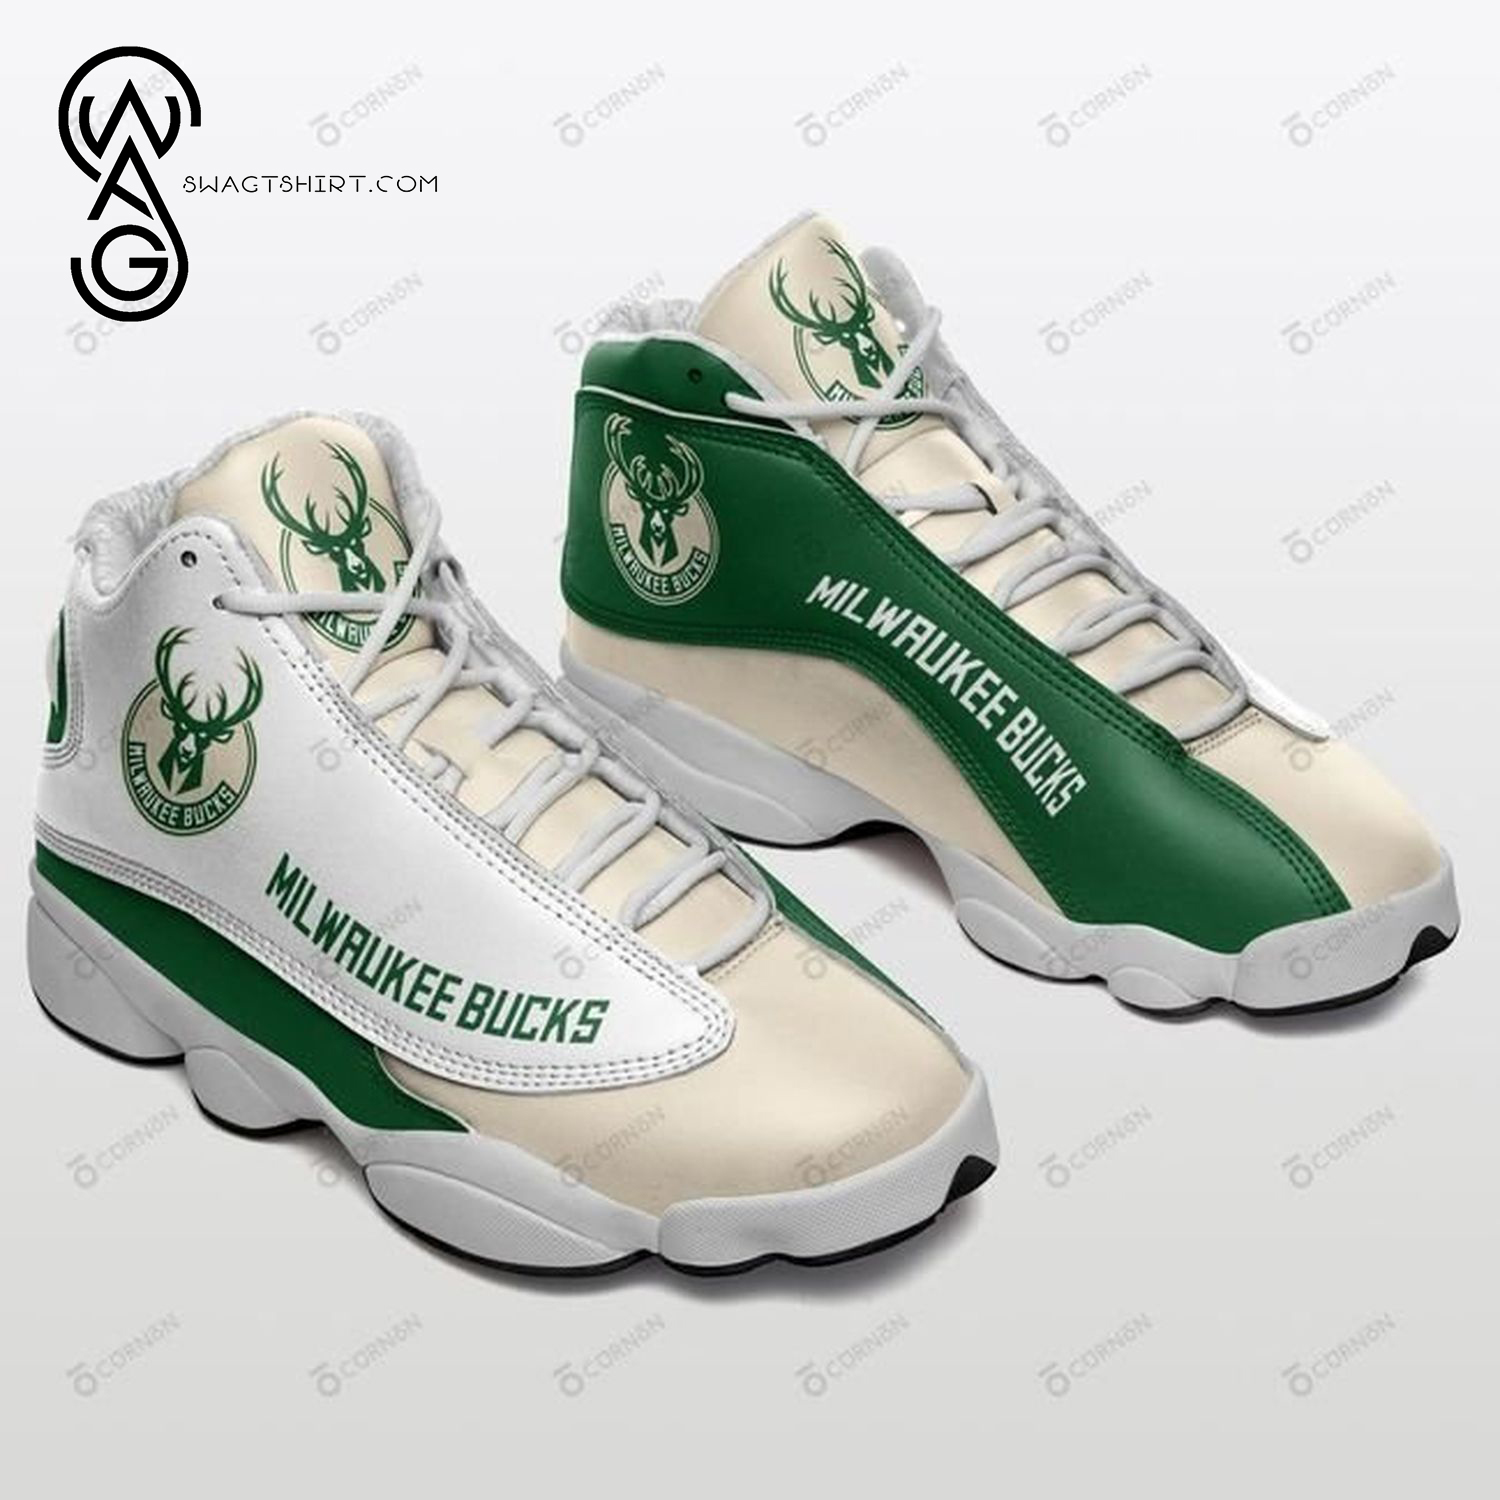 NBA Milwaukee Bucks Air Jordan 13 Shoes